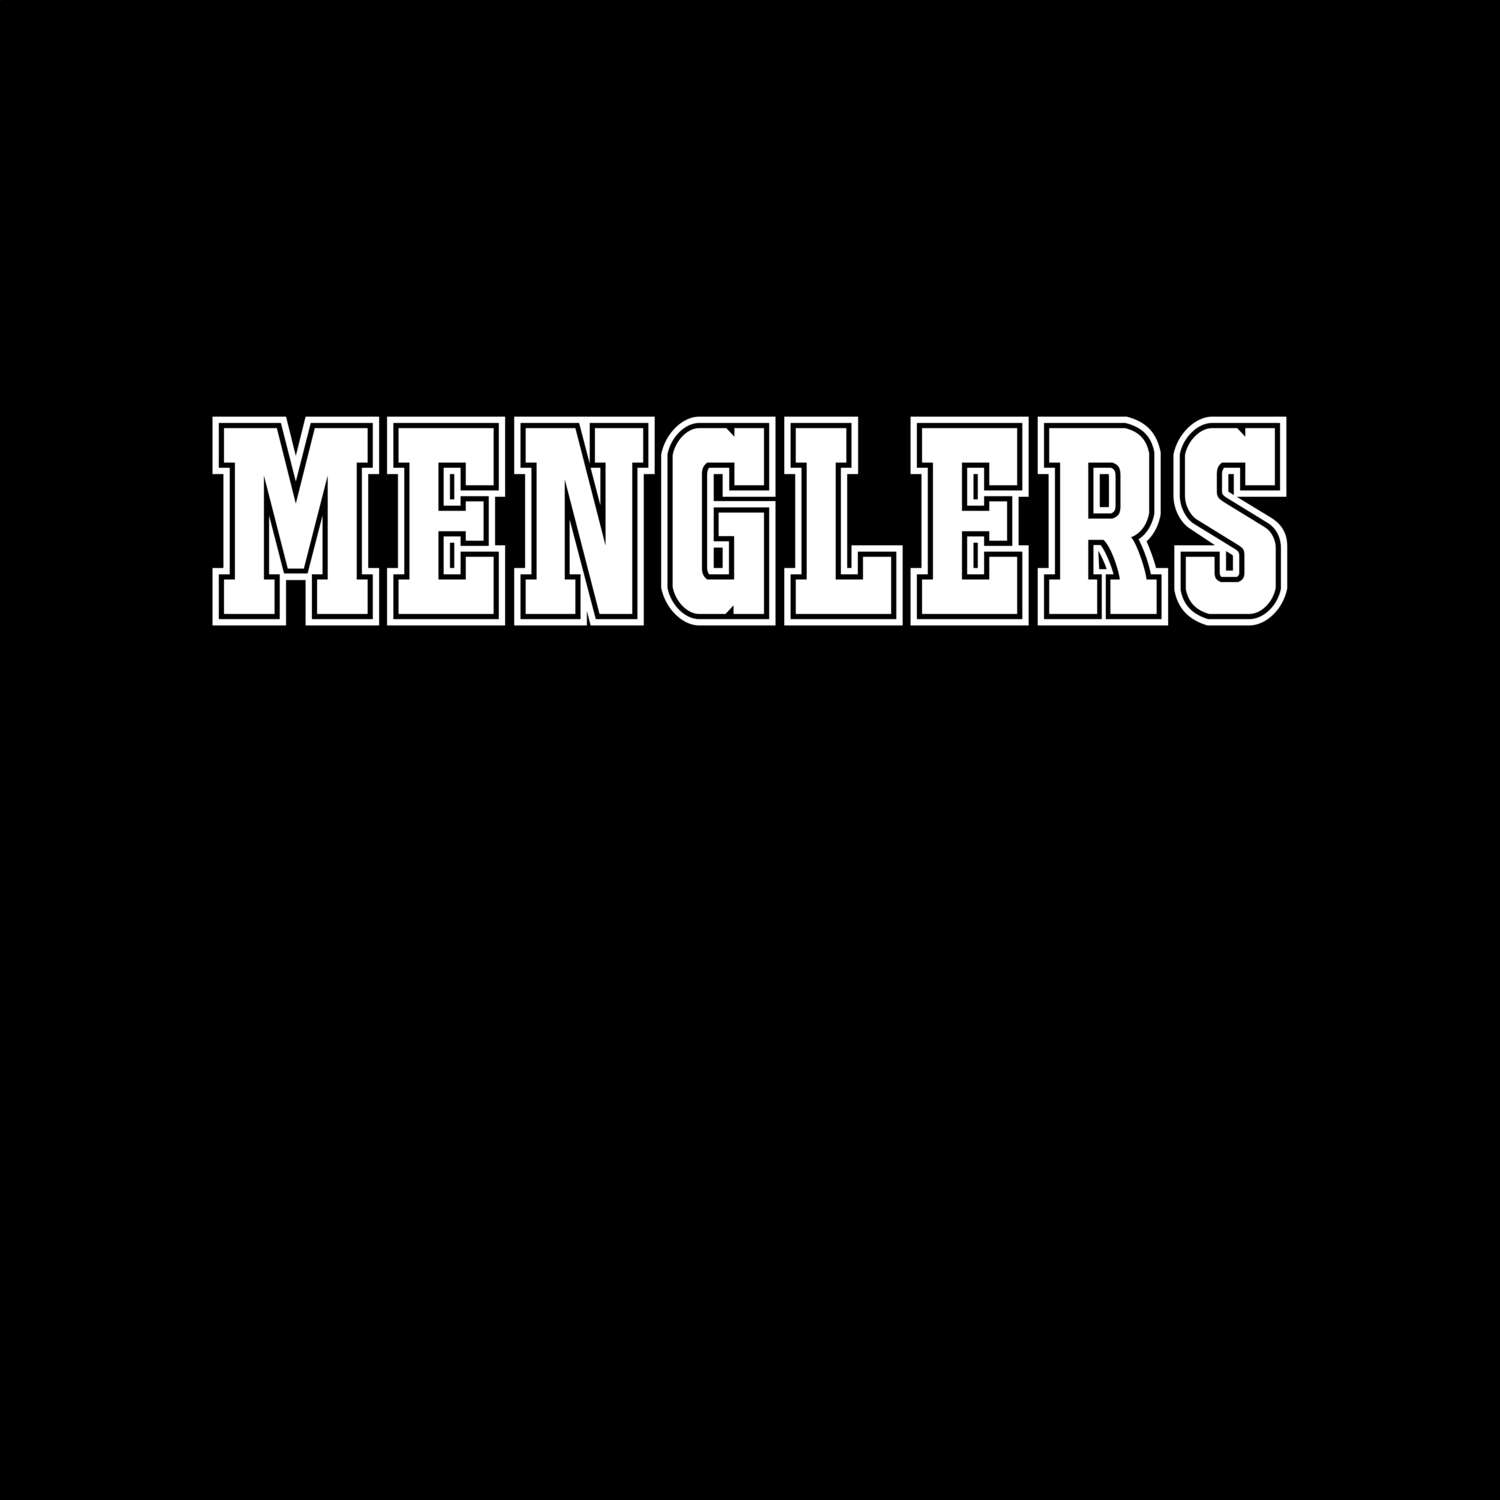 Menglers T-Shirt »Classic«